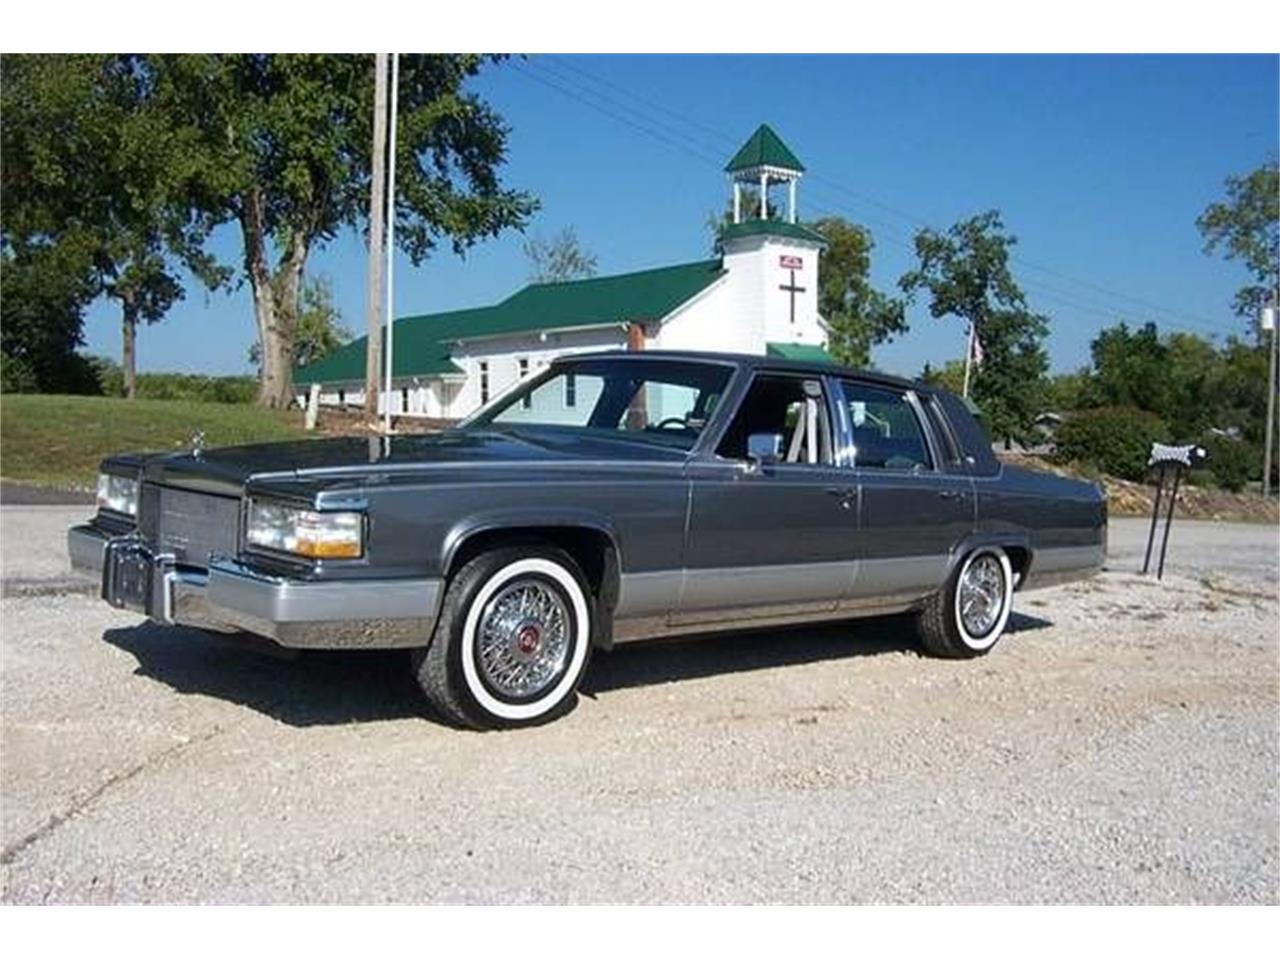 1990 Cadillac Brougham for Sale | ClassicCars.com | CC-1187391